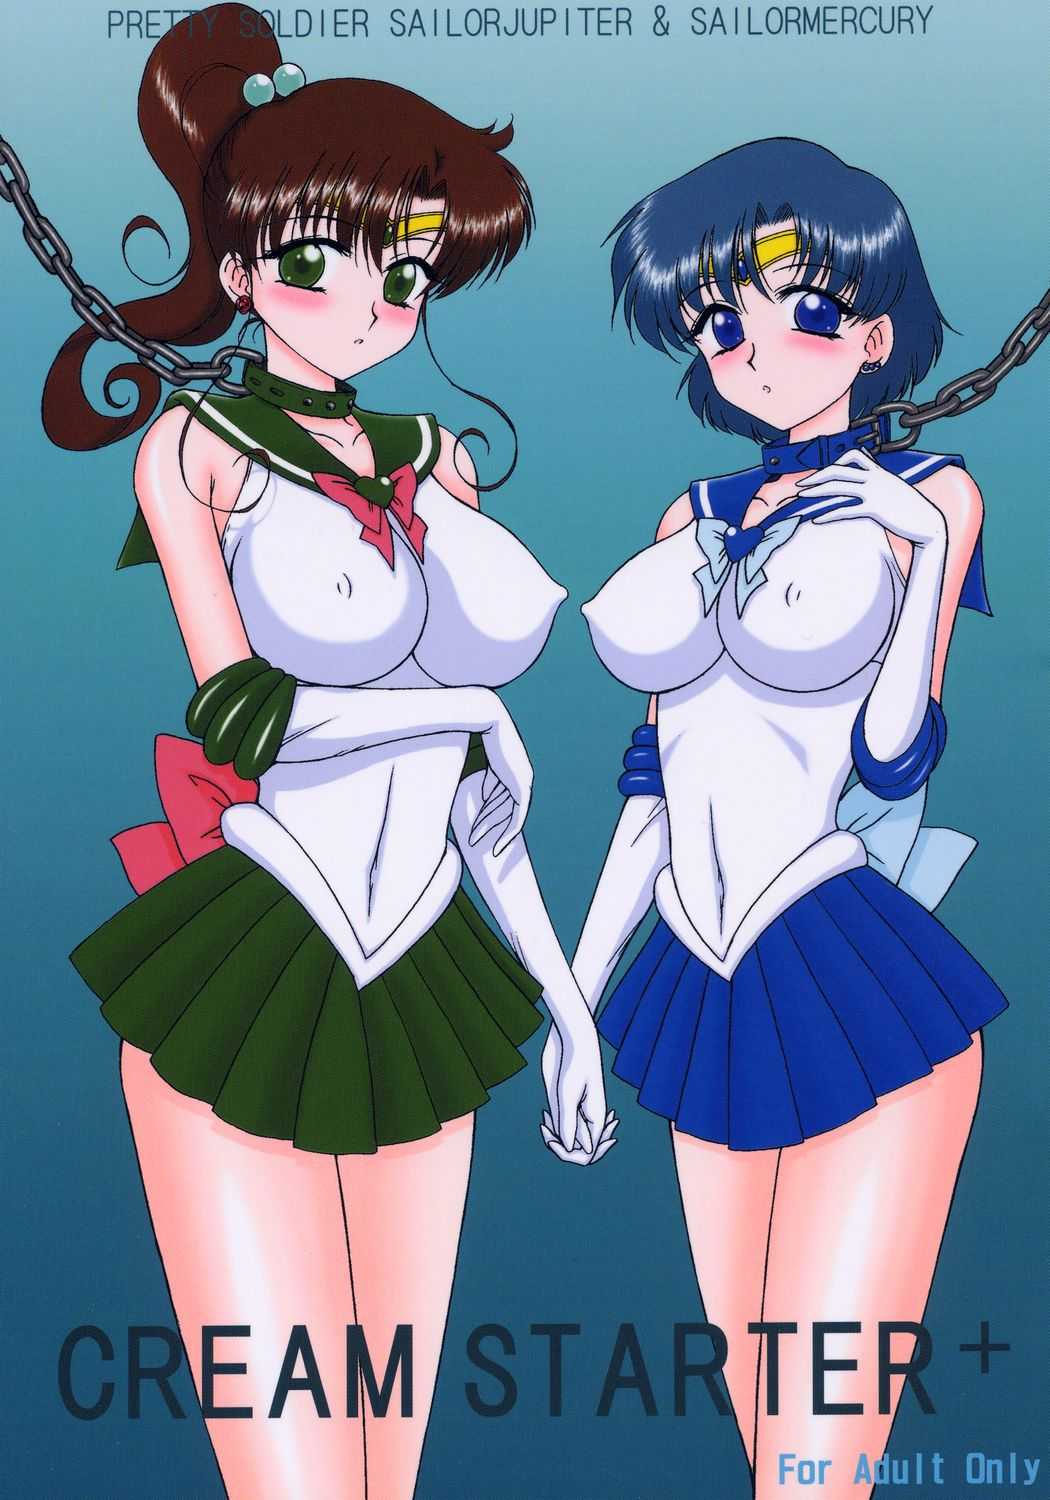 Doujinshi - Sailor Moon - Cream Starter 